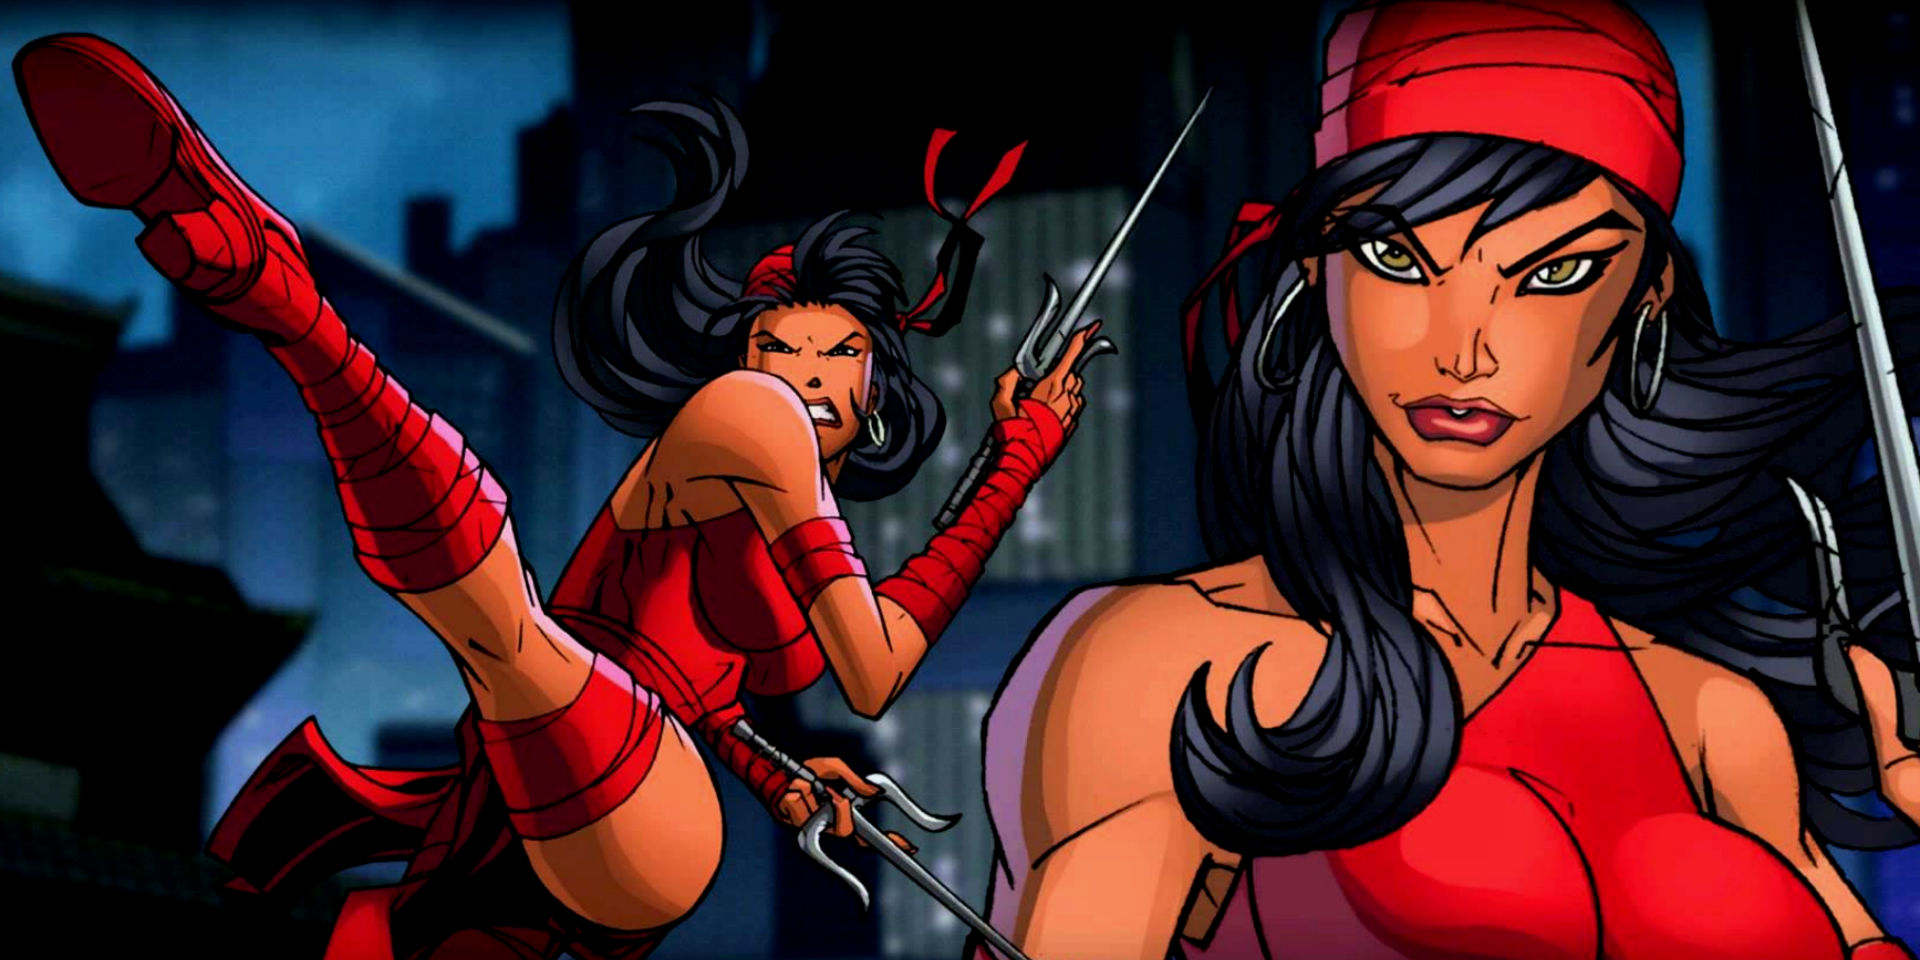 Elektra Natchios: storyline, edizioni e cosplayer